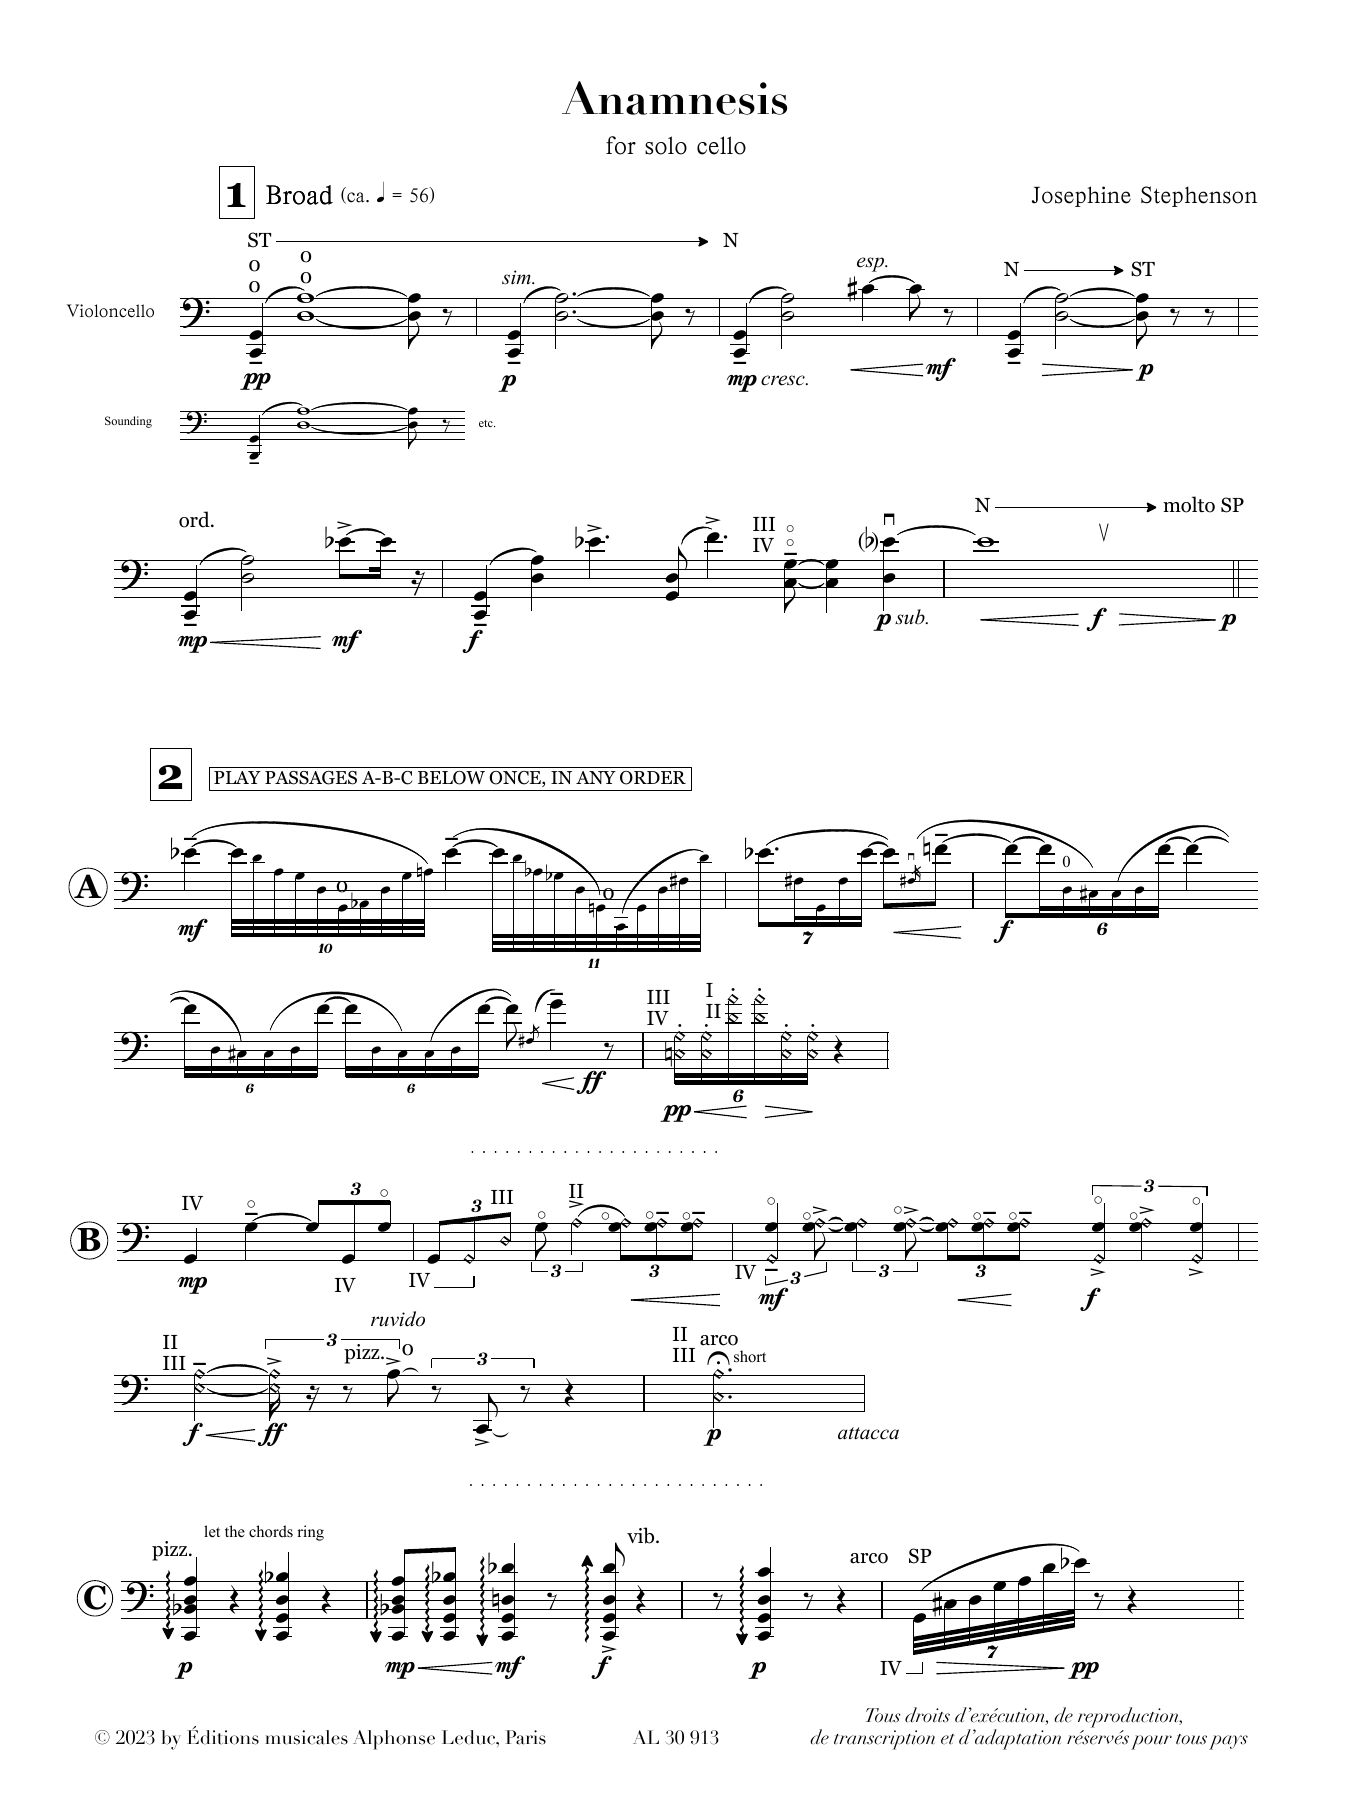 Josephine Stephenson Anamnesis sheet music notes printable PDF score